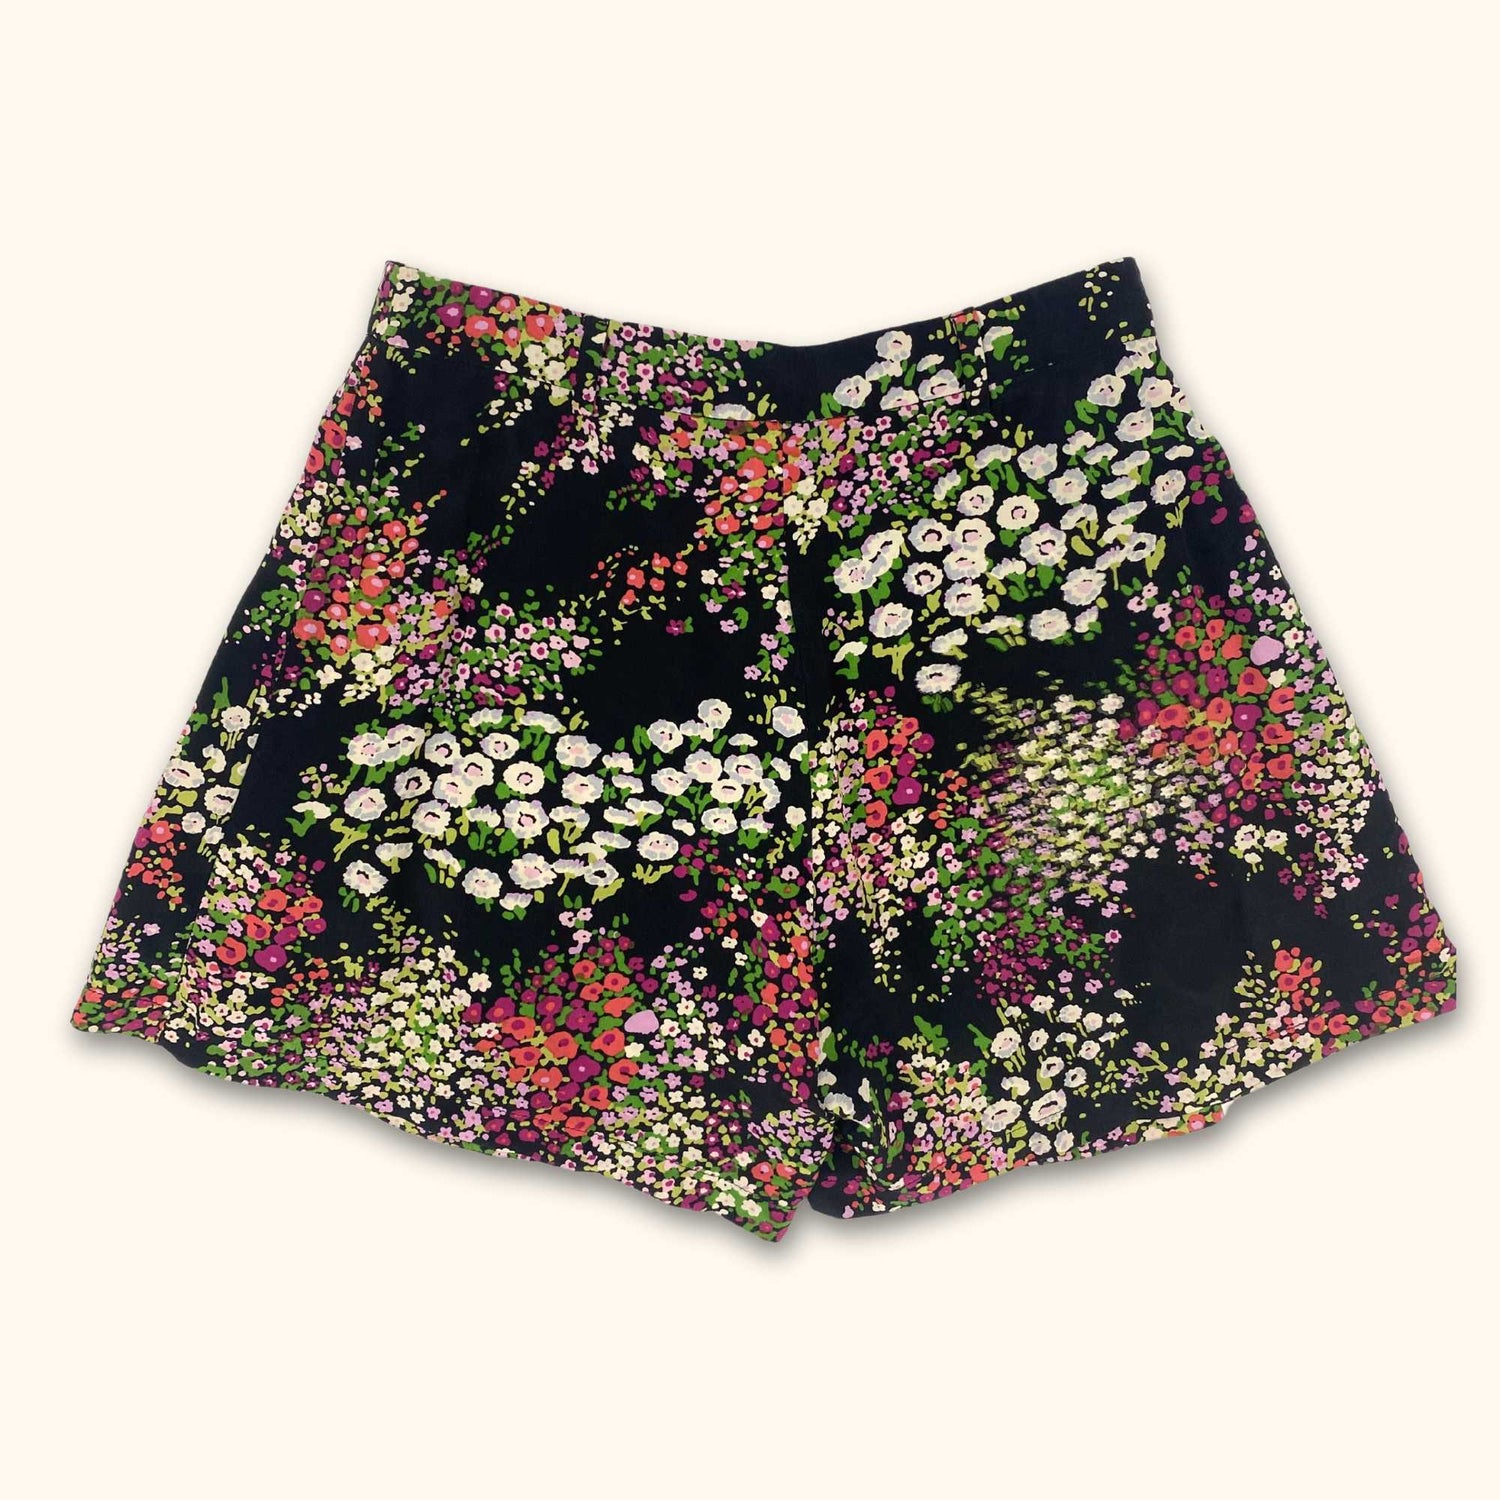 Topshop Black Floral Summer Shorts - Size 10 - Topshop - Shorts